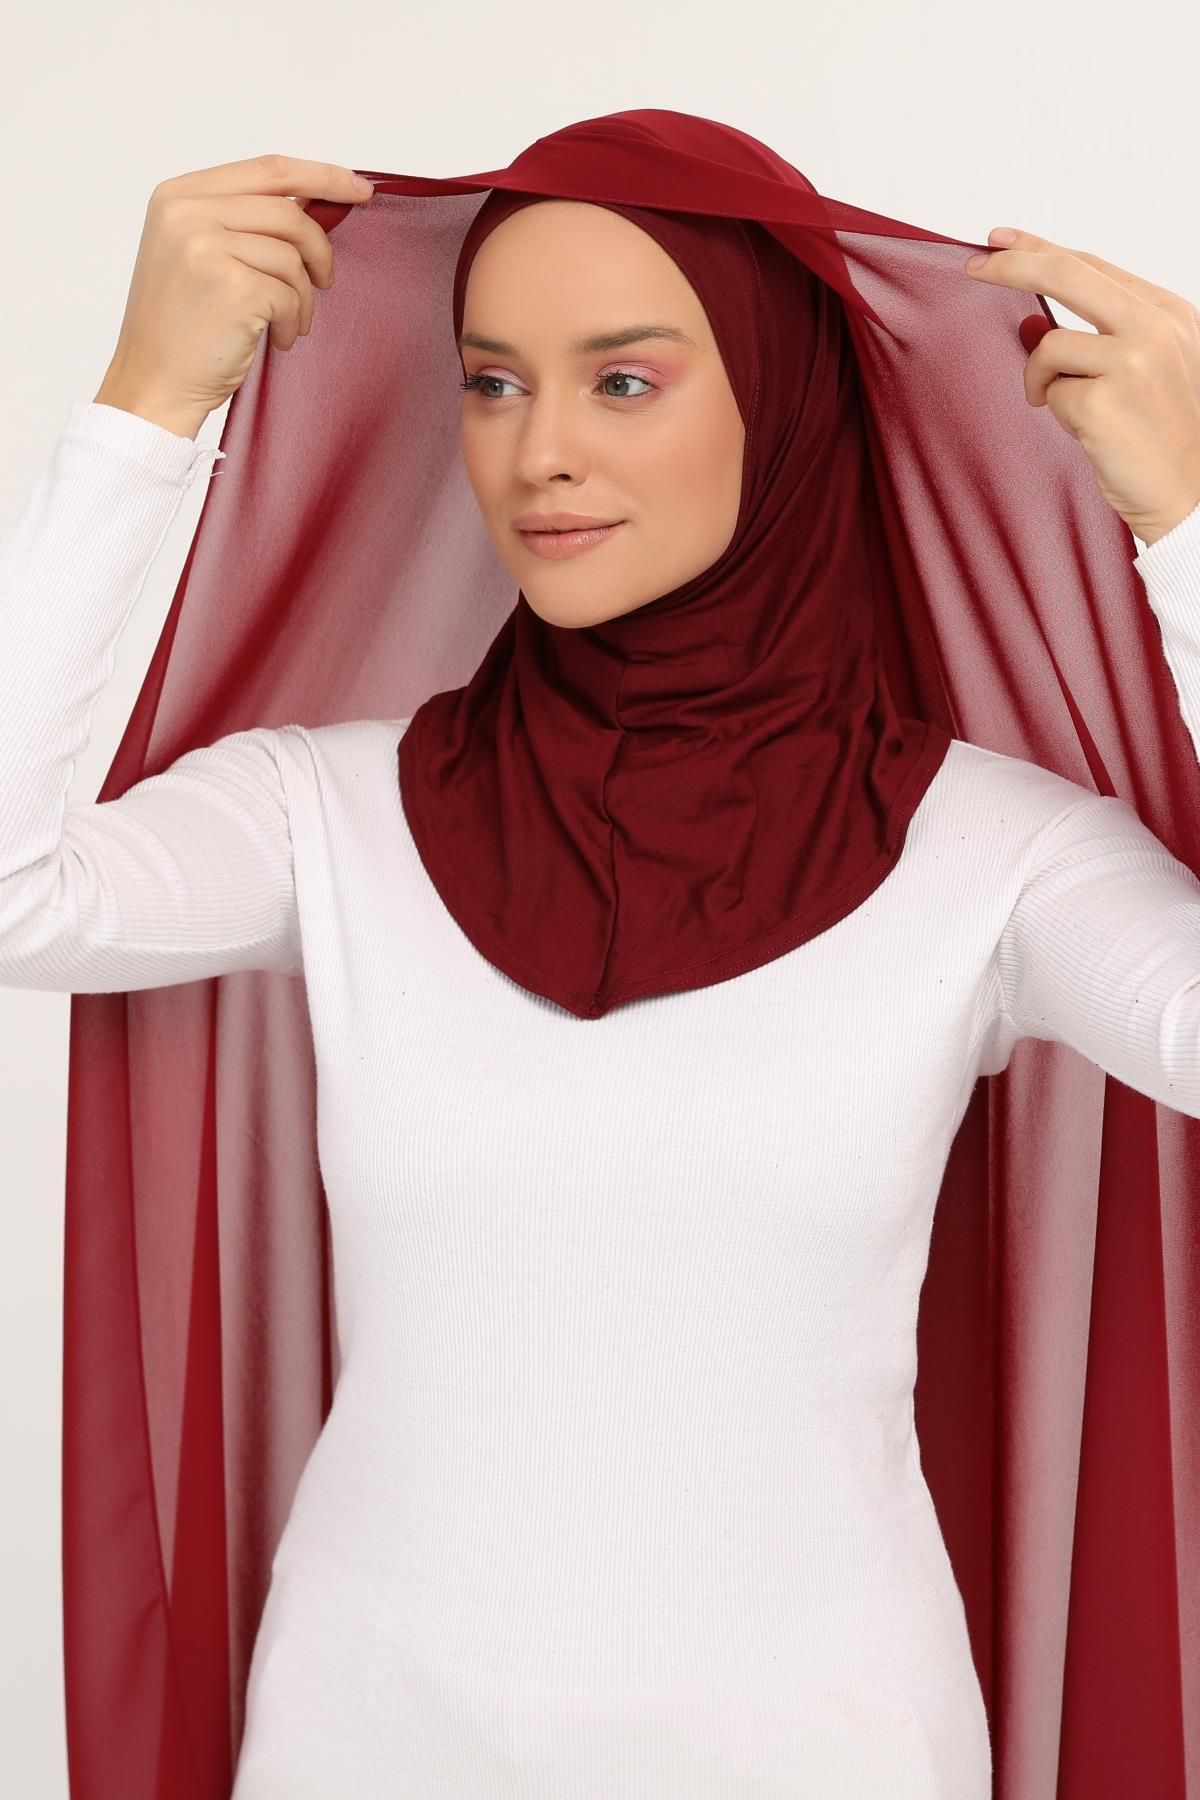 Altobeh Hazır Lüks Pratik Hijablı Şifon Şal Bordo